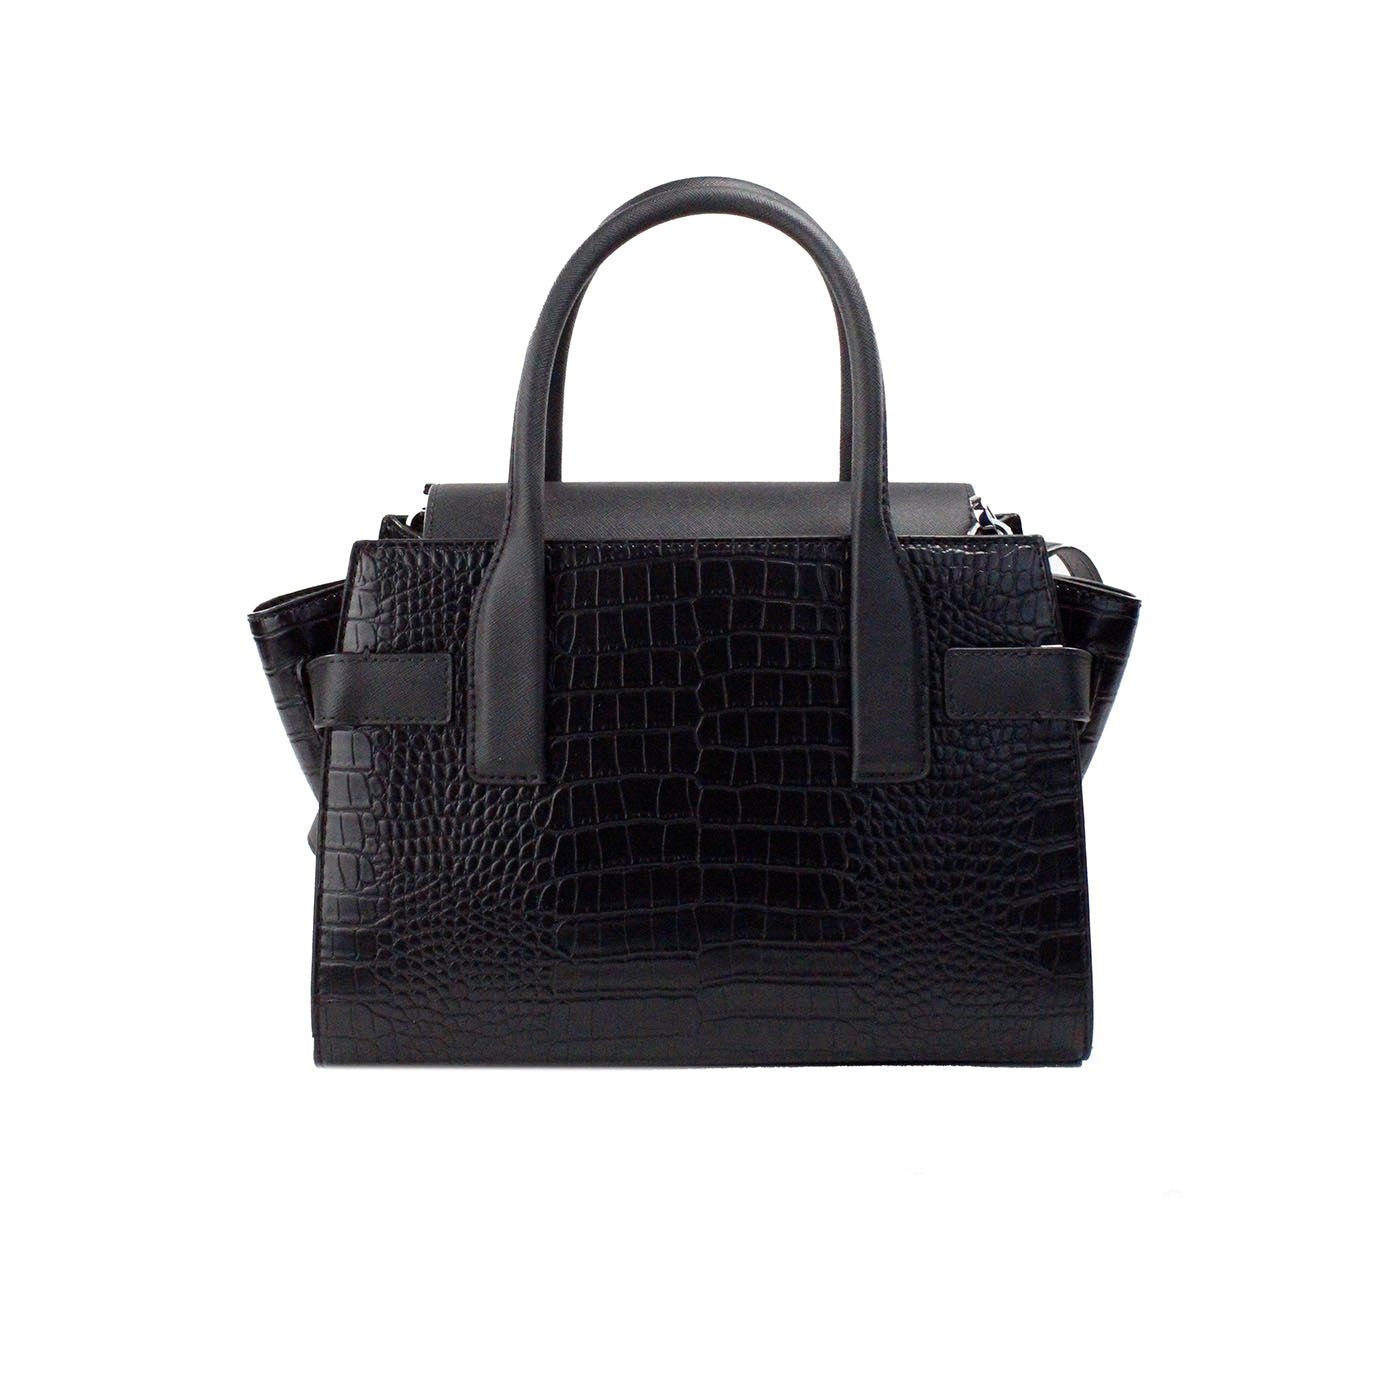 Michael Kors Carmen Medium Black Embossed Leather Satchel Purse Bag | Fashionsarah.com